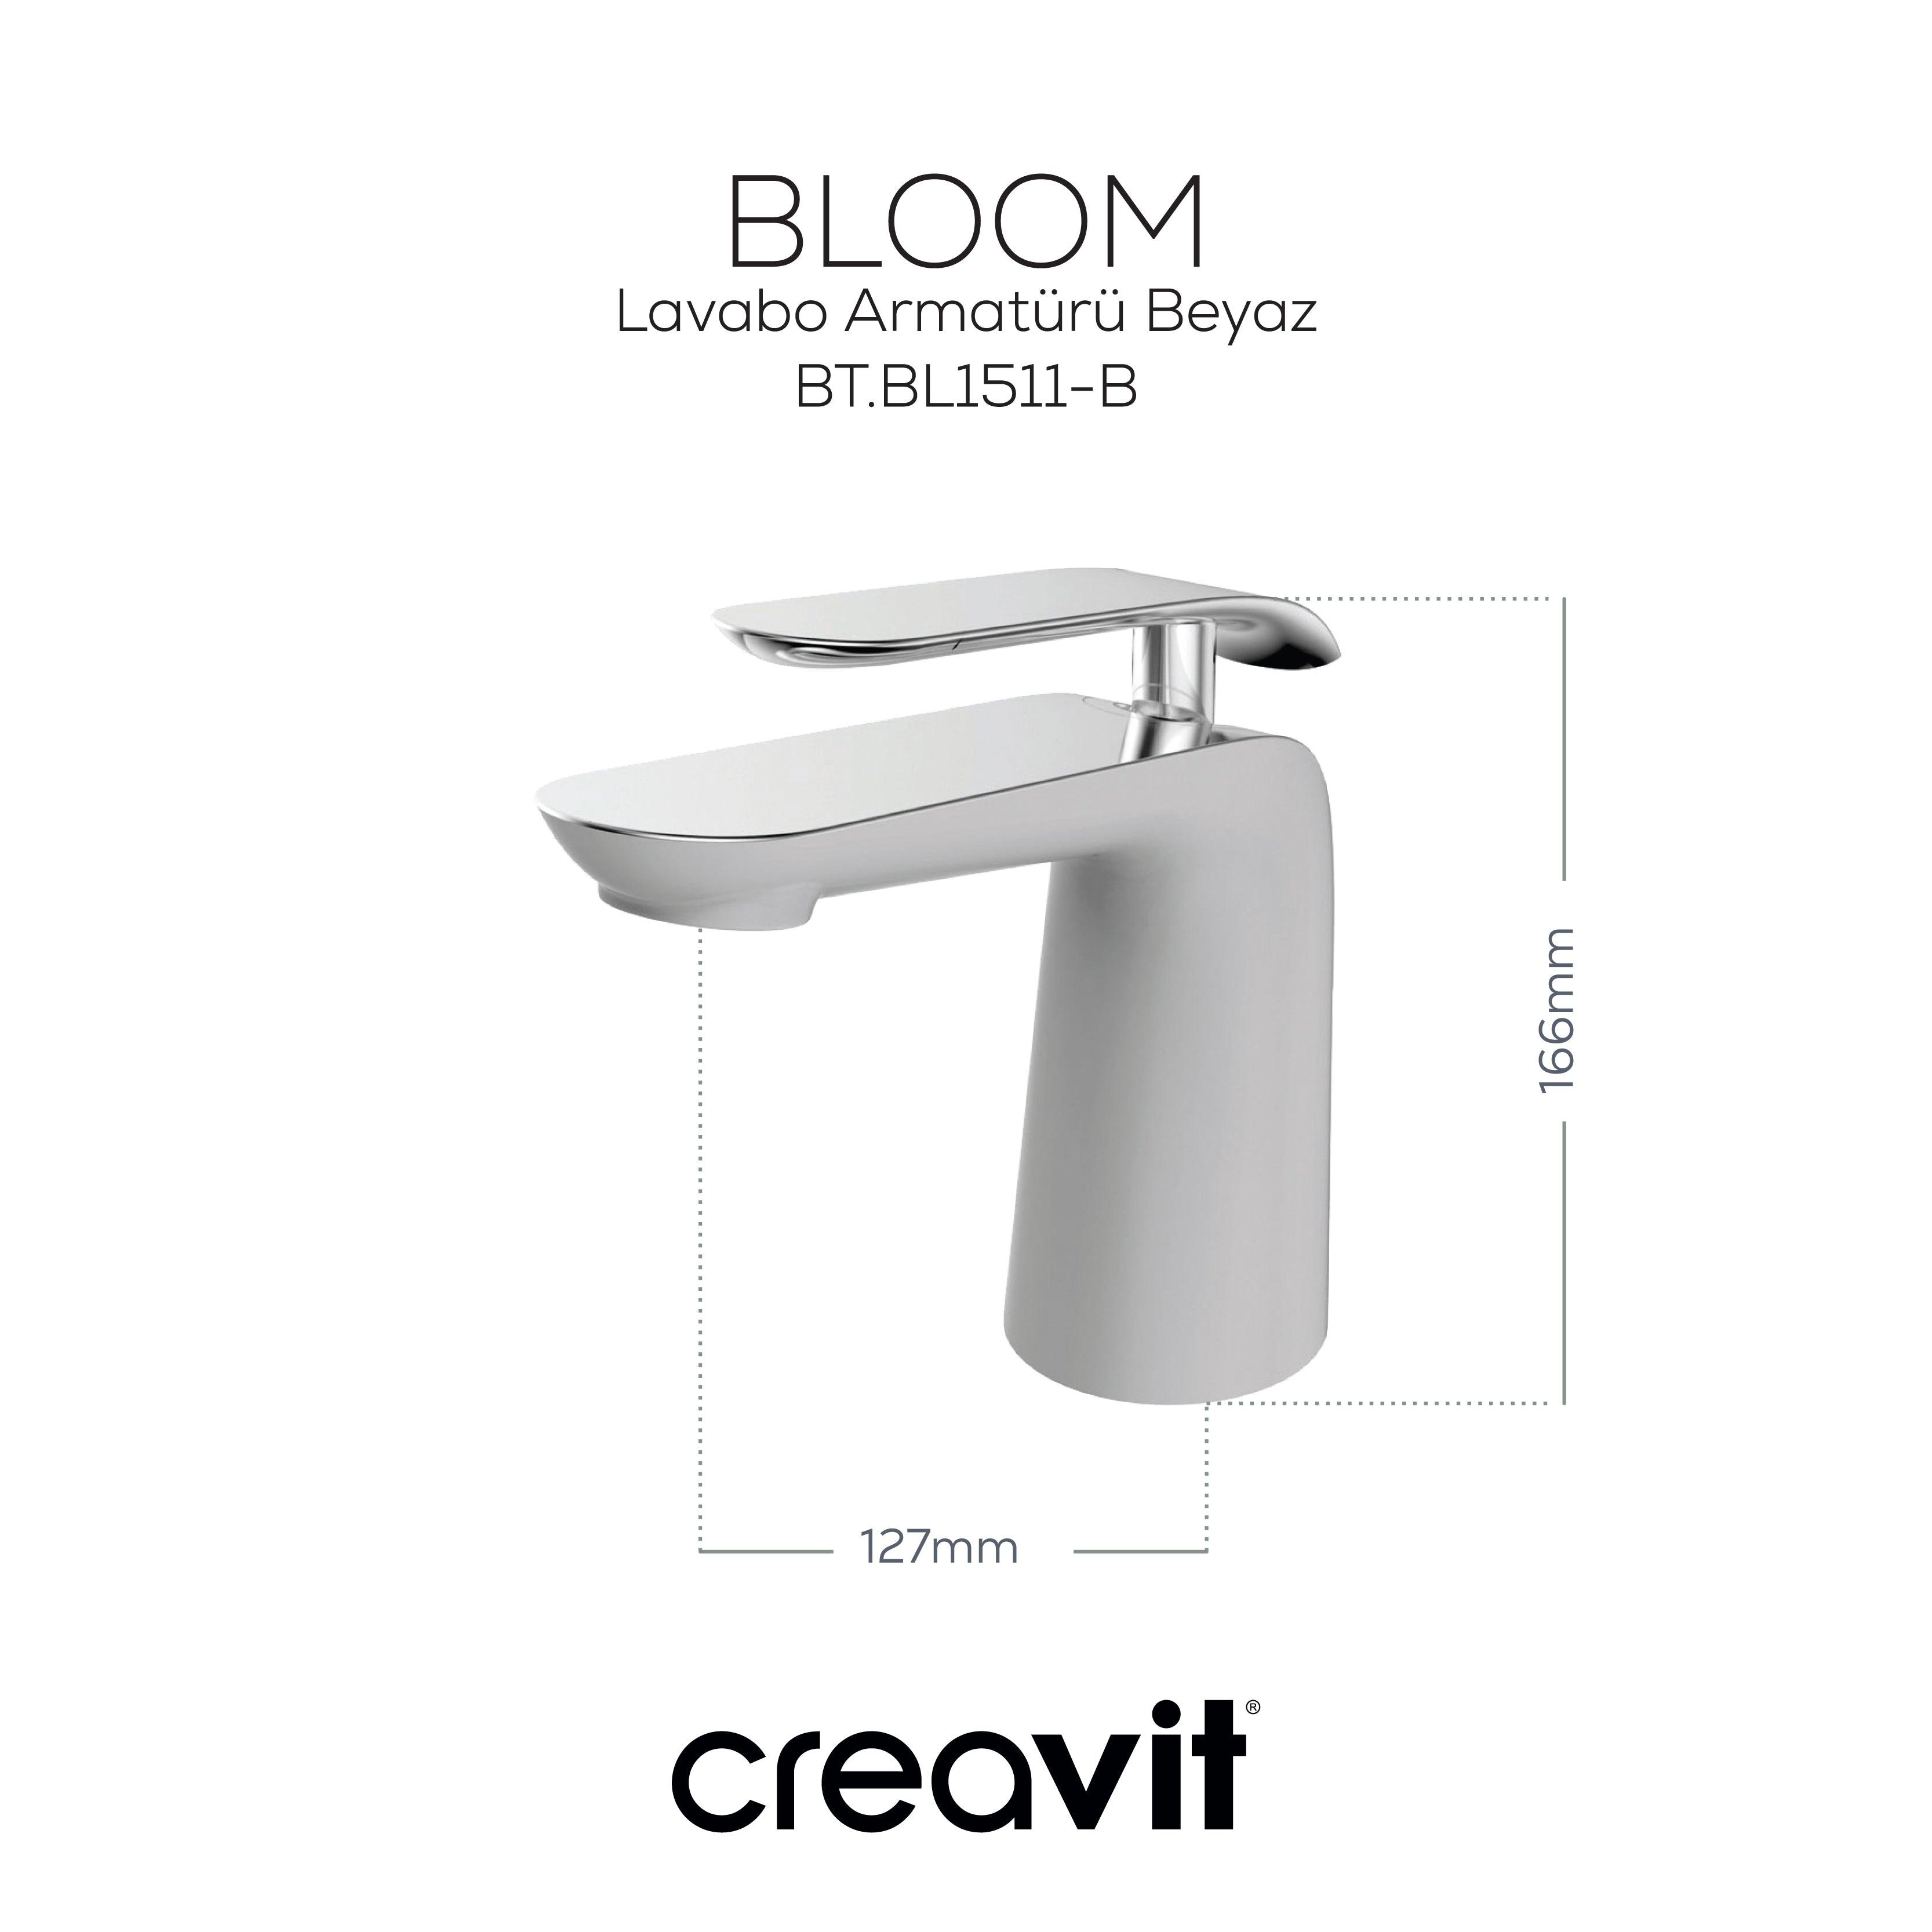 Bloom Lavabo Armatürü Beyaz - Creavit | Banyo Bu Tarafta